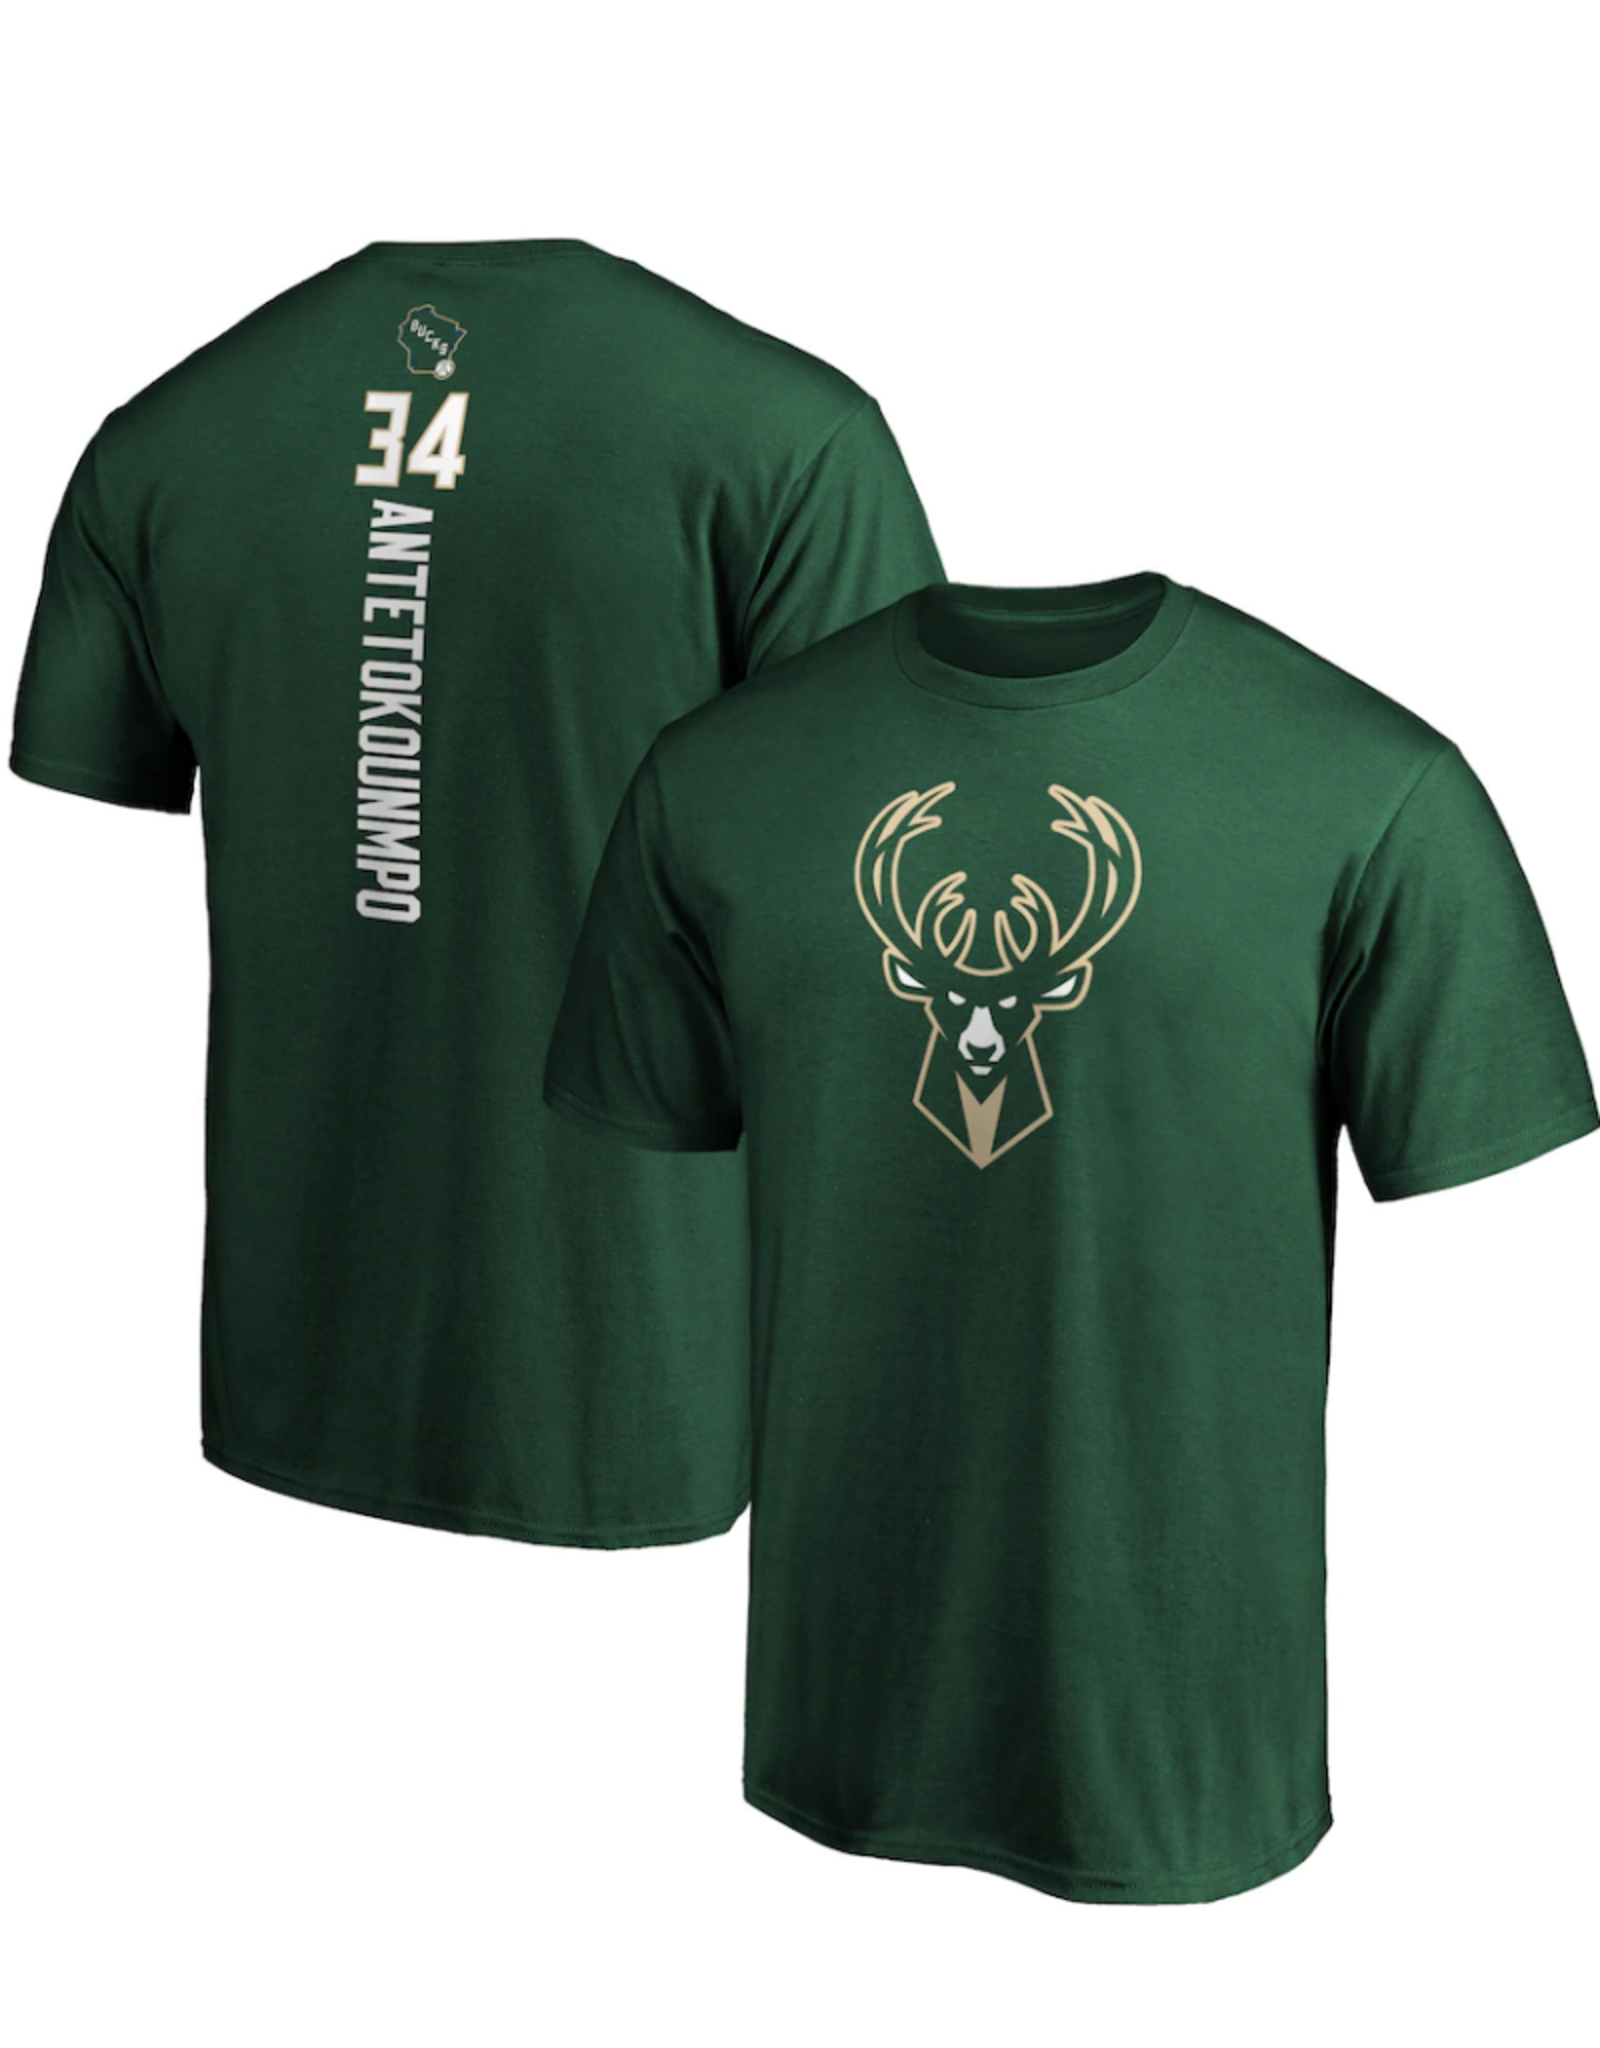 Fanatics Fanatics Men's Playmaker T-Shirt Antetokounmpo #34 Milwaukee Bucks